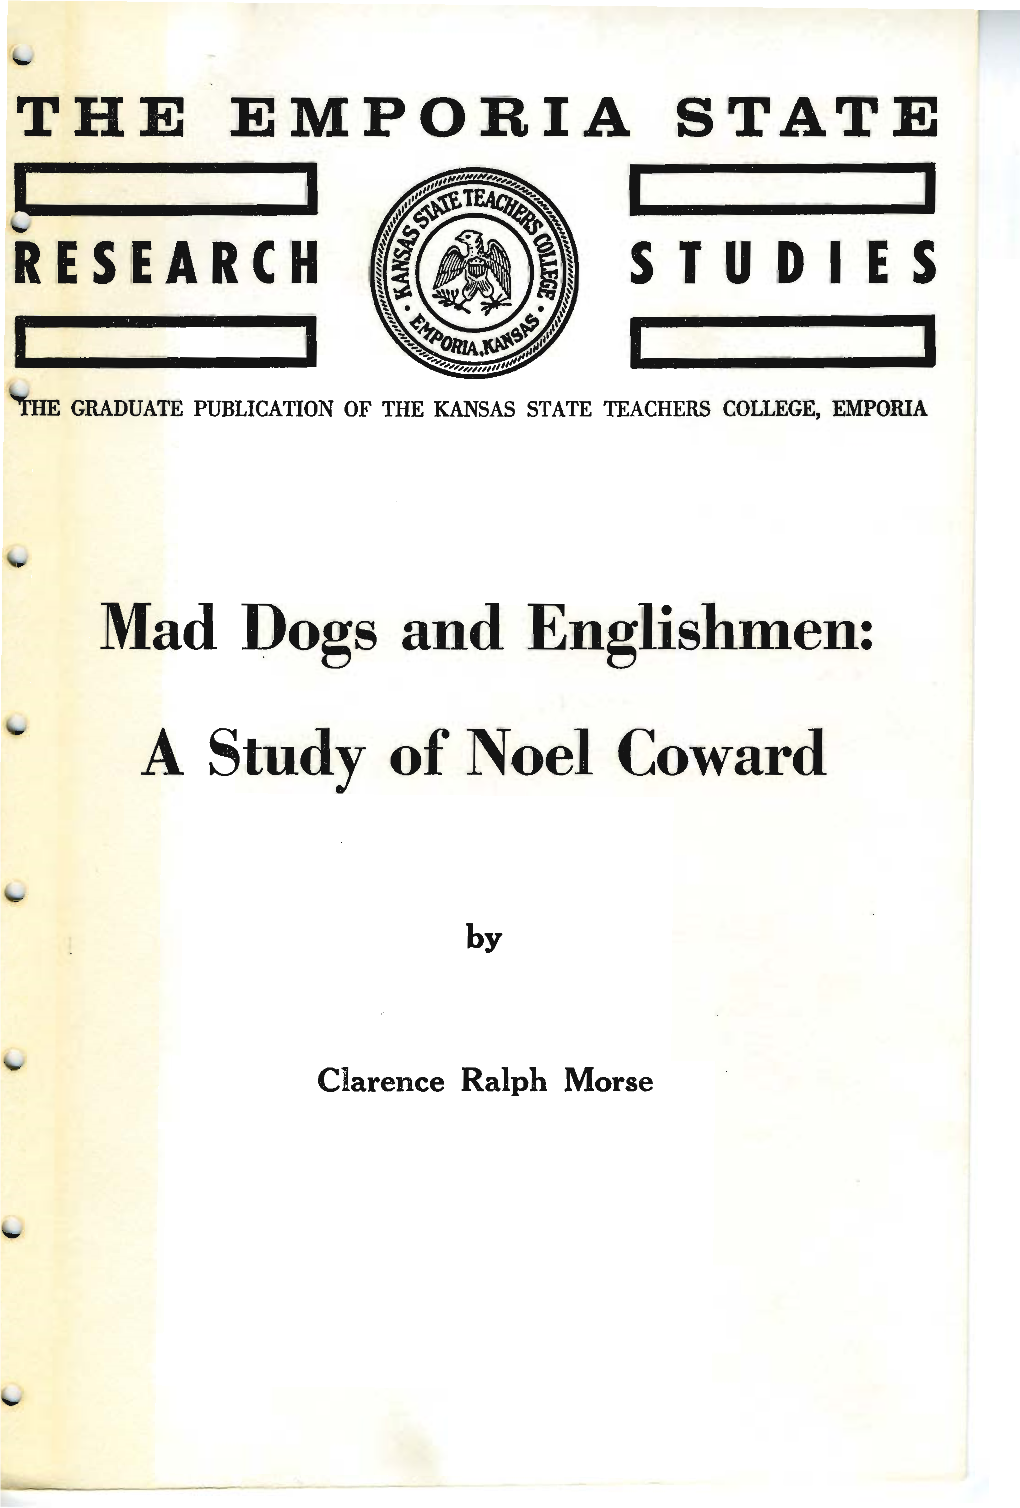 A Study of Noel Coward